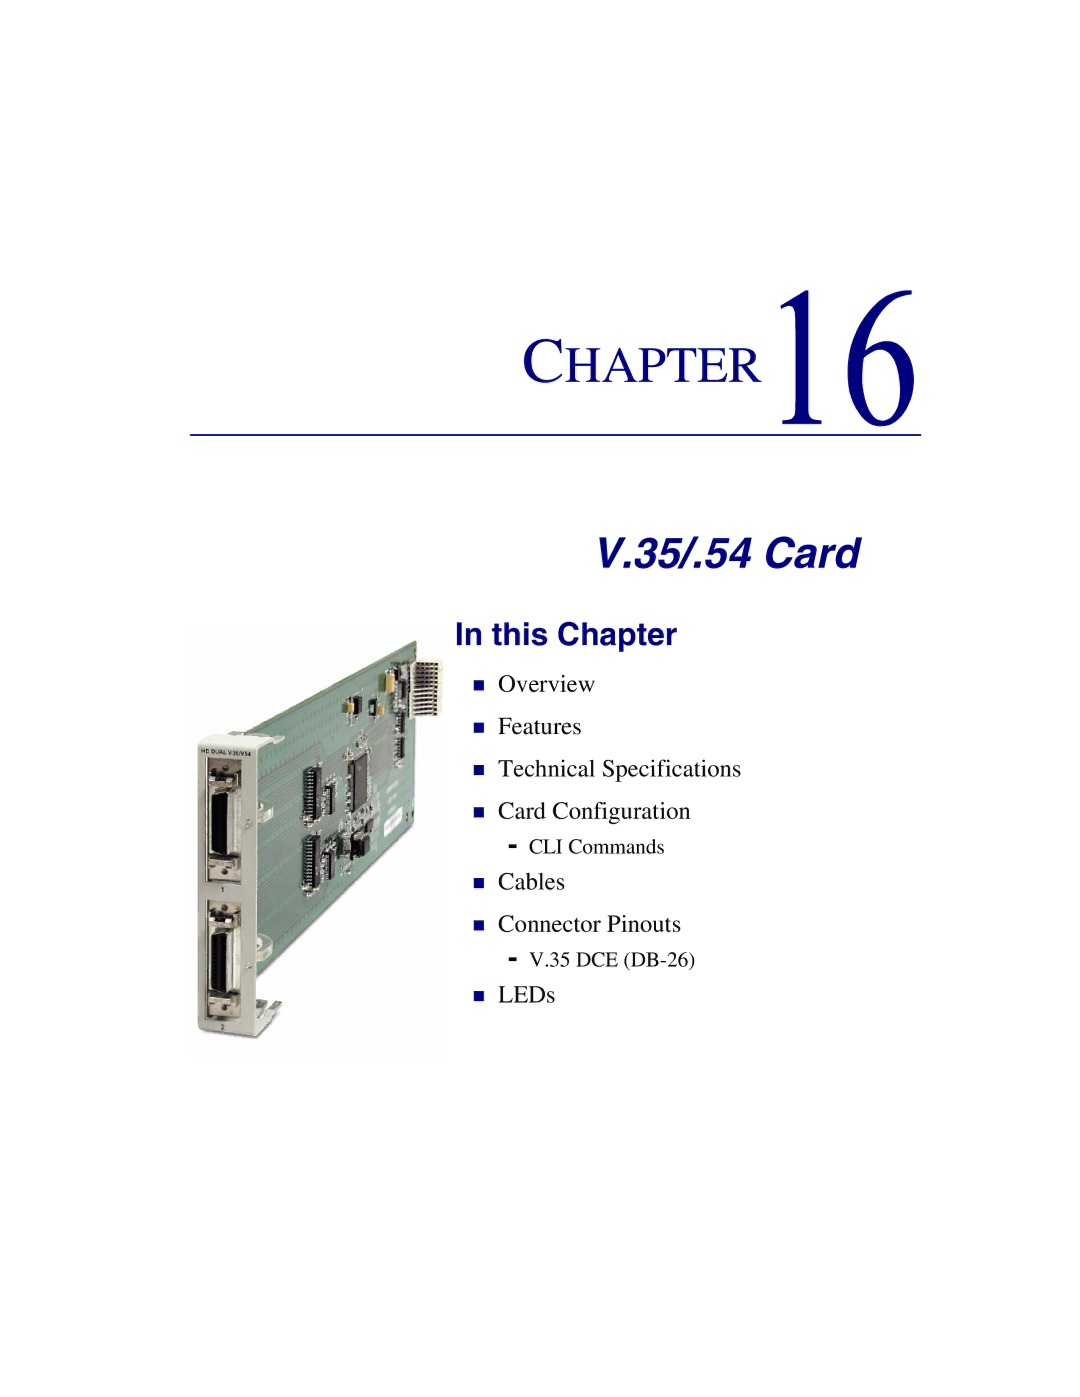 Carrier Access Axxius 800 user manual 35/.54 Card 